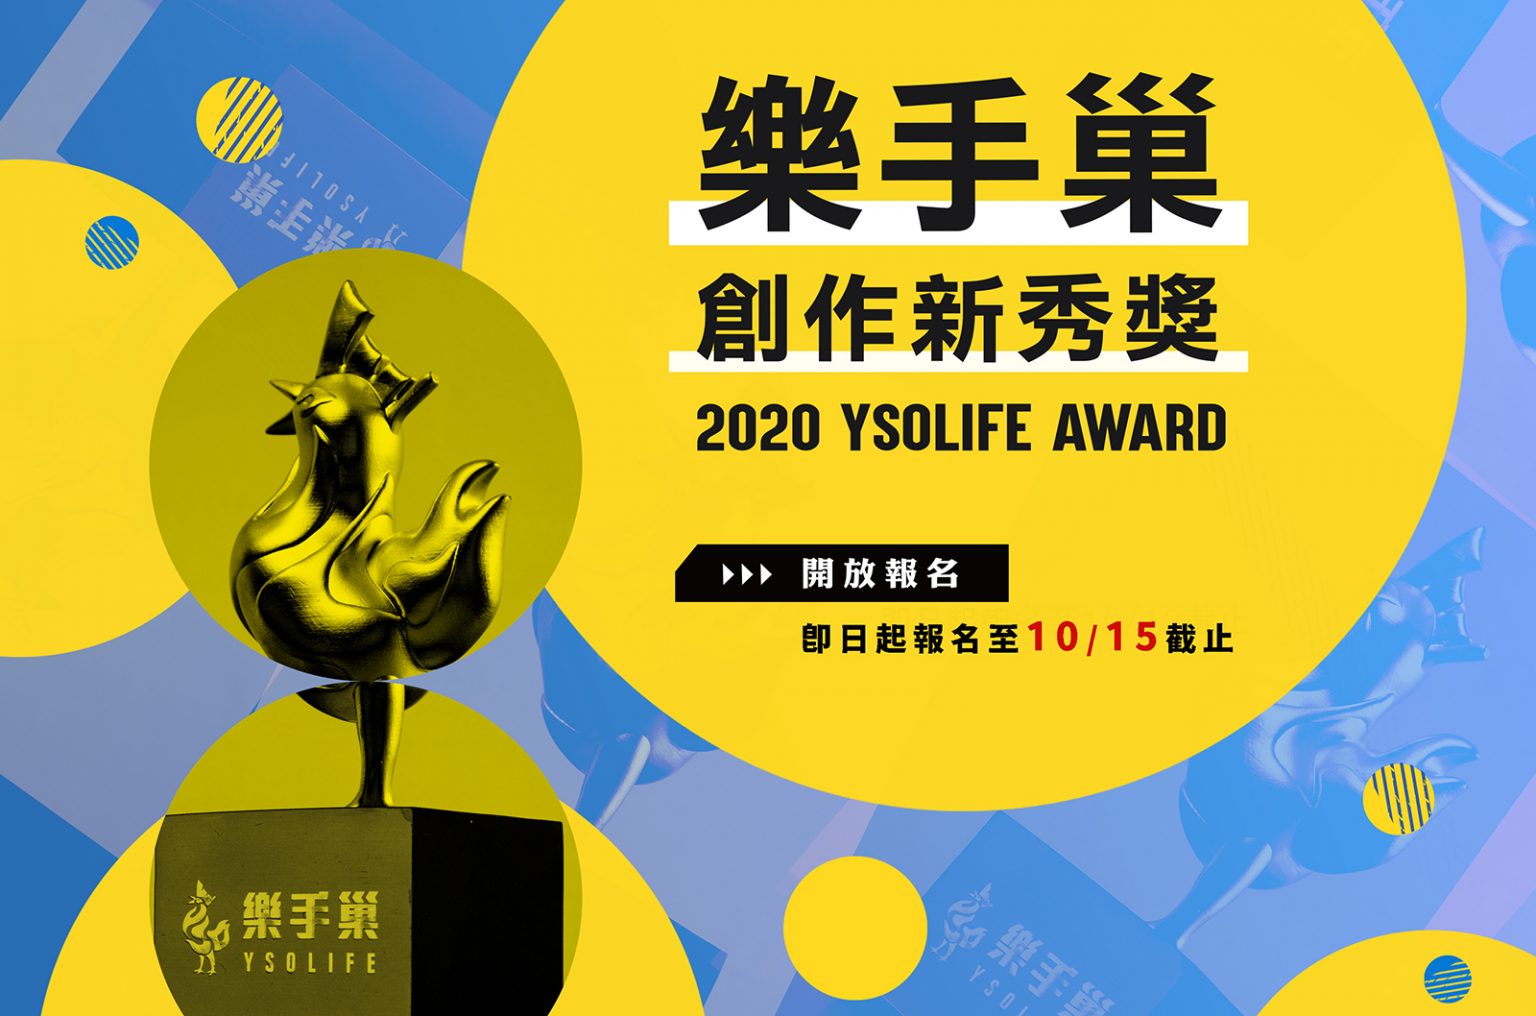 2020_ysolife_award-1536×1016